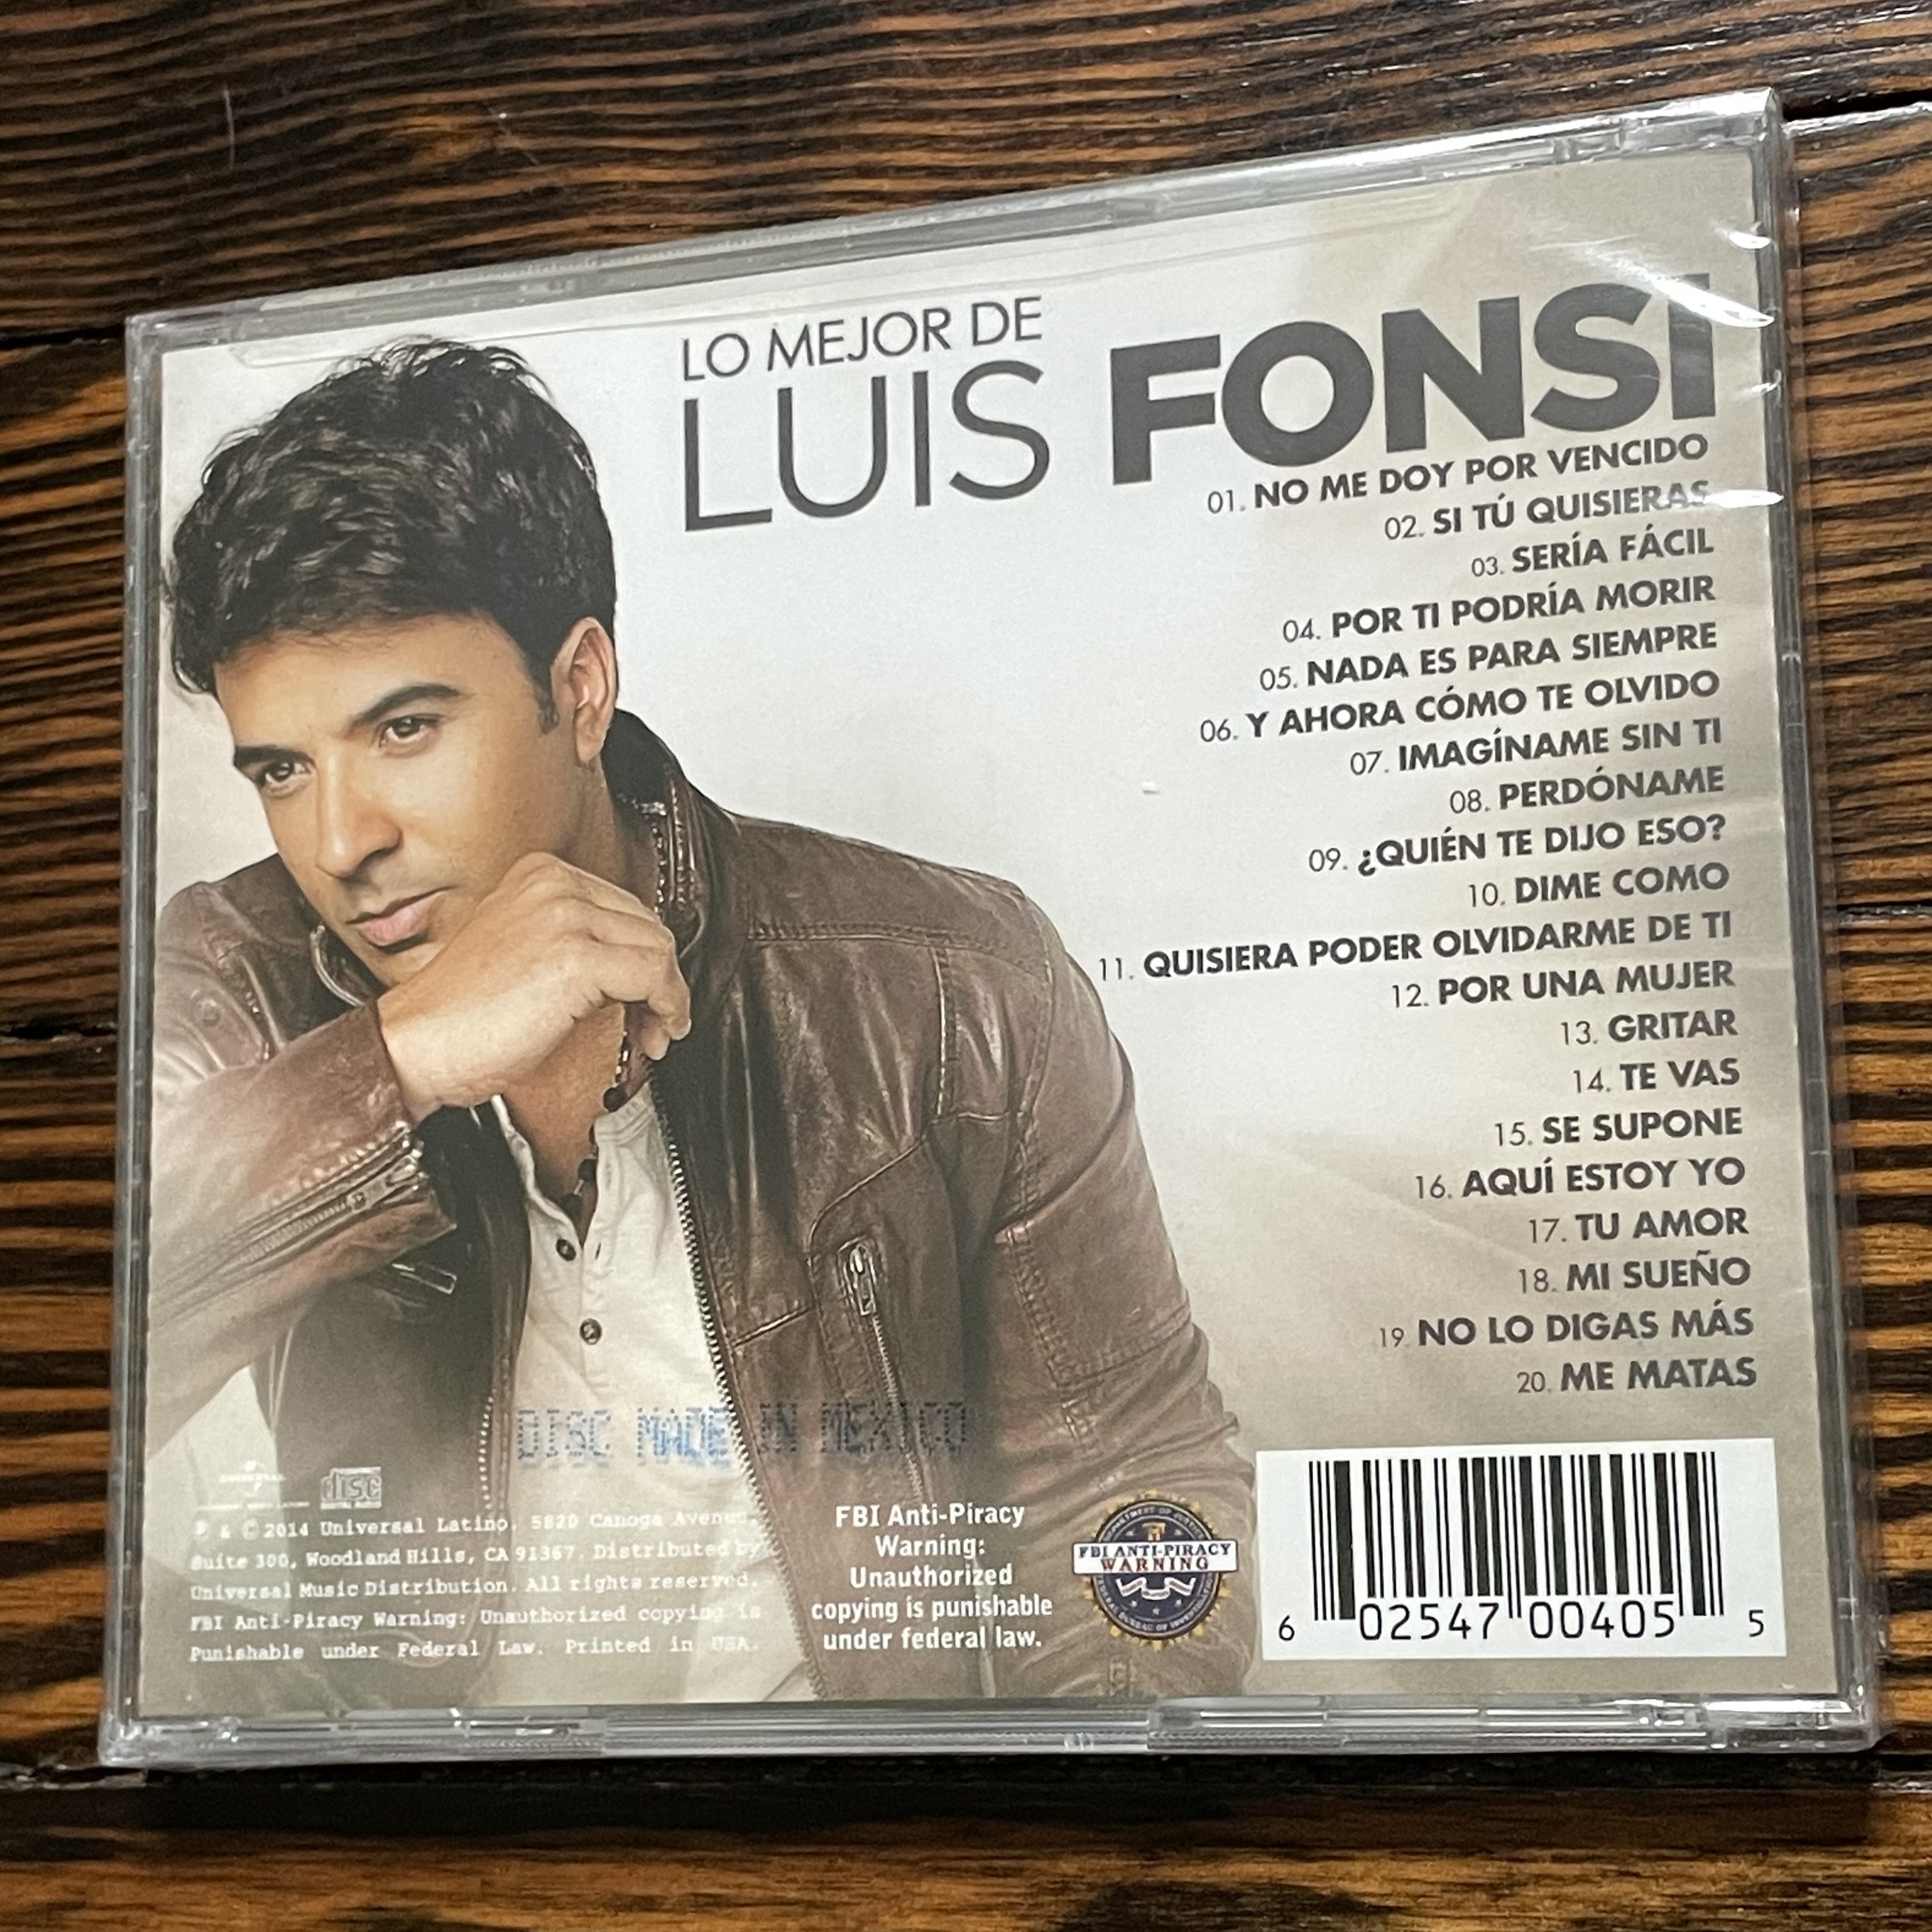 Lo Mejor De Luis Fonsi (NEW) - Luis Fonsi - Audio CD 602547004055 | eBay